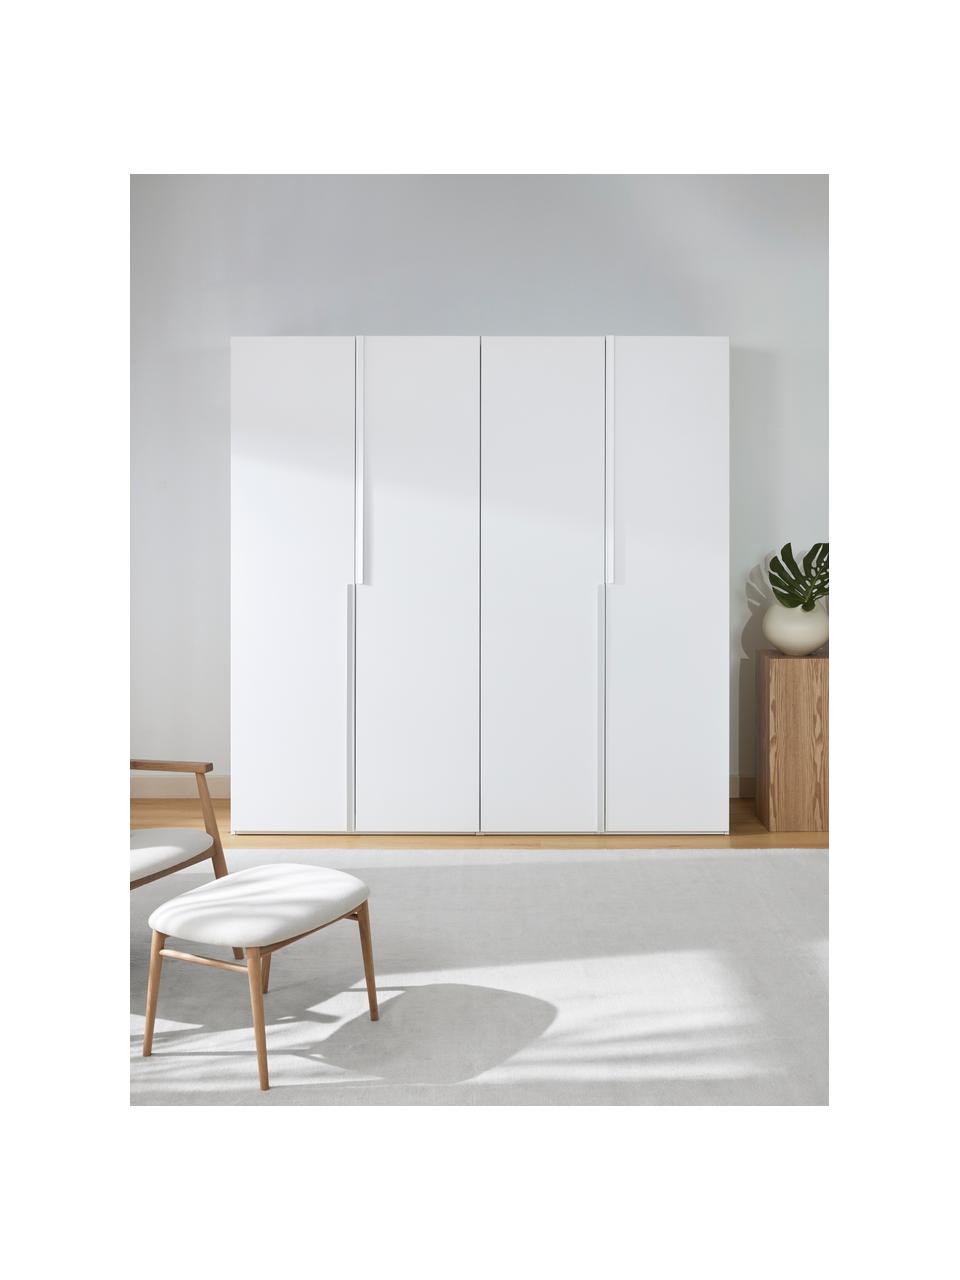 Modulární skříň s otočnými dveřmi Leon, šířka 200 cm, více variant, Bílá, Interiér Basic, výška 200 cm